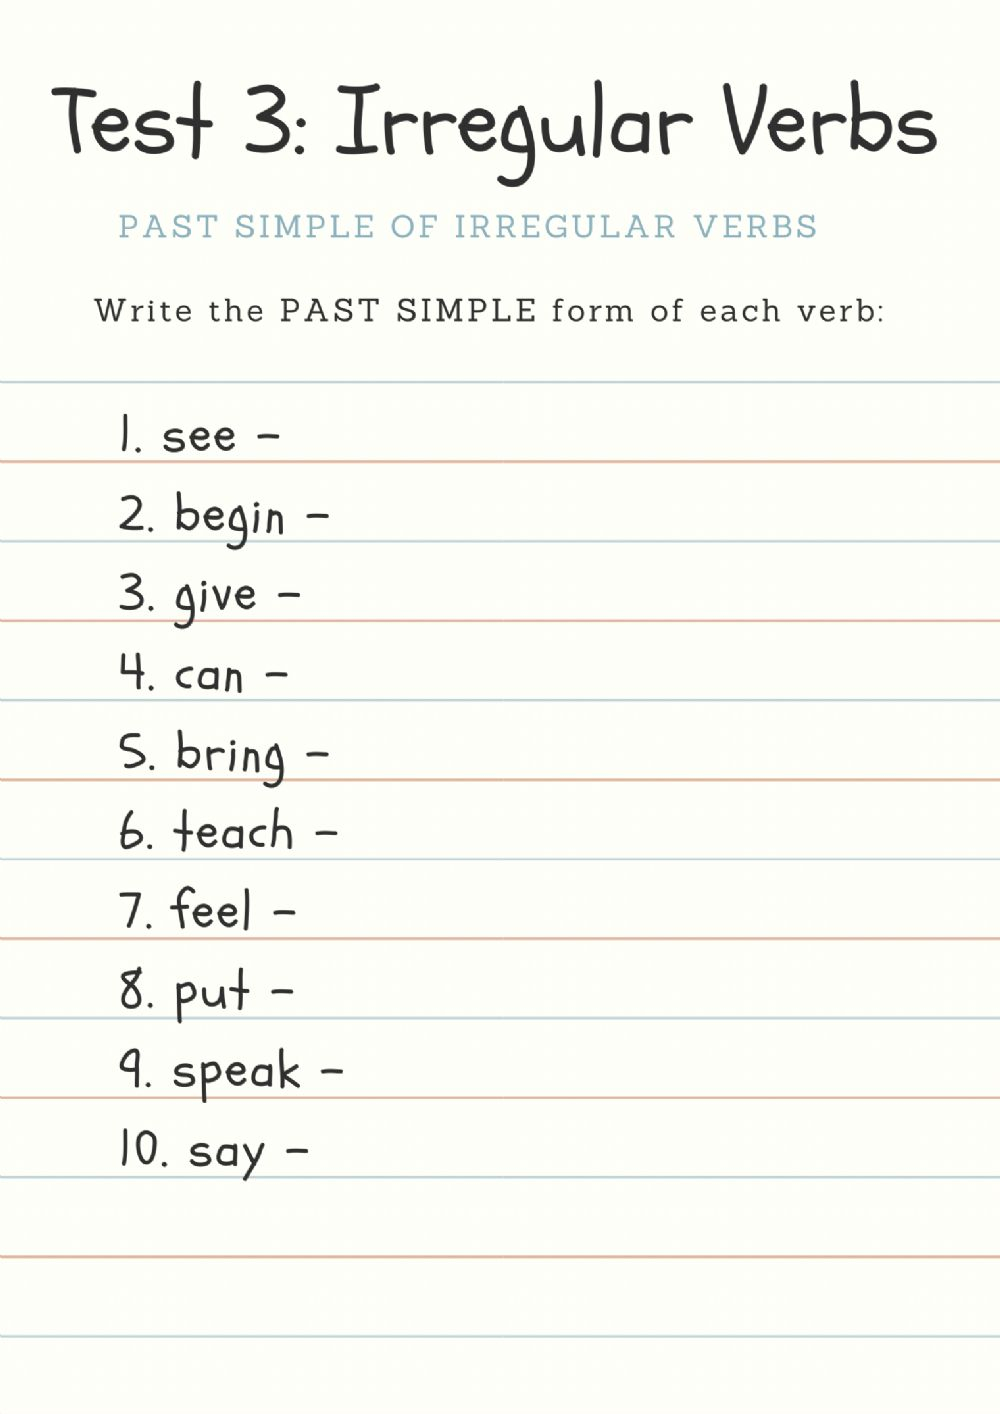 Irregular Verb Past Simple Test 3 Worksheet